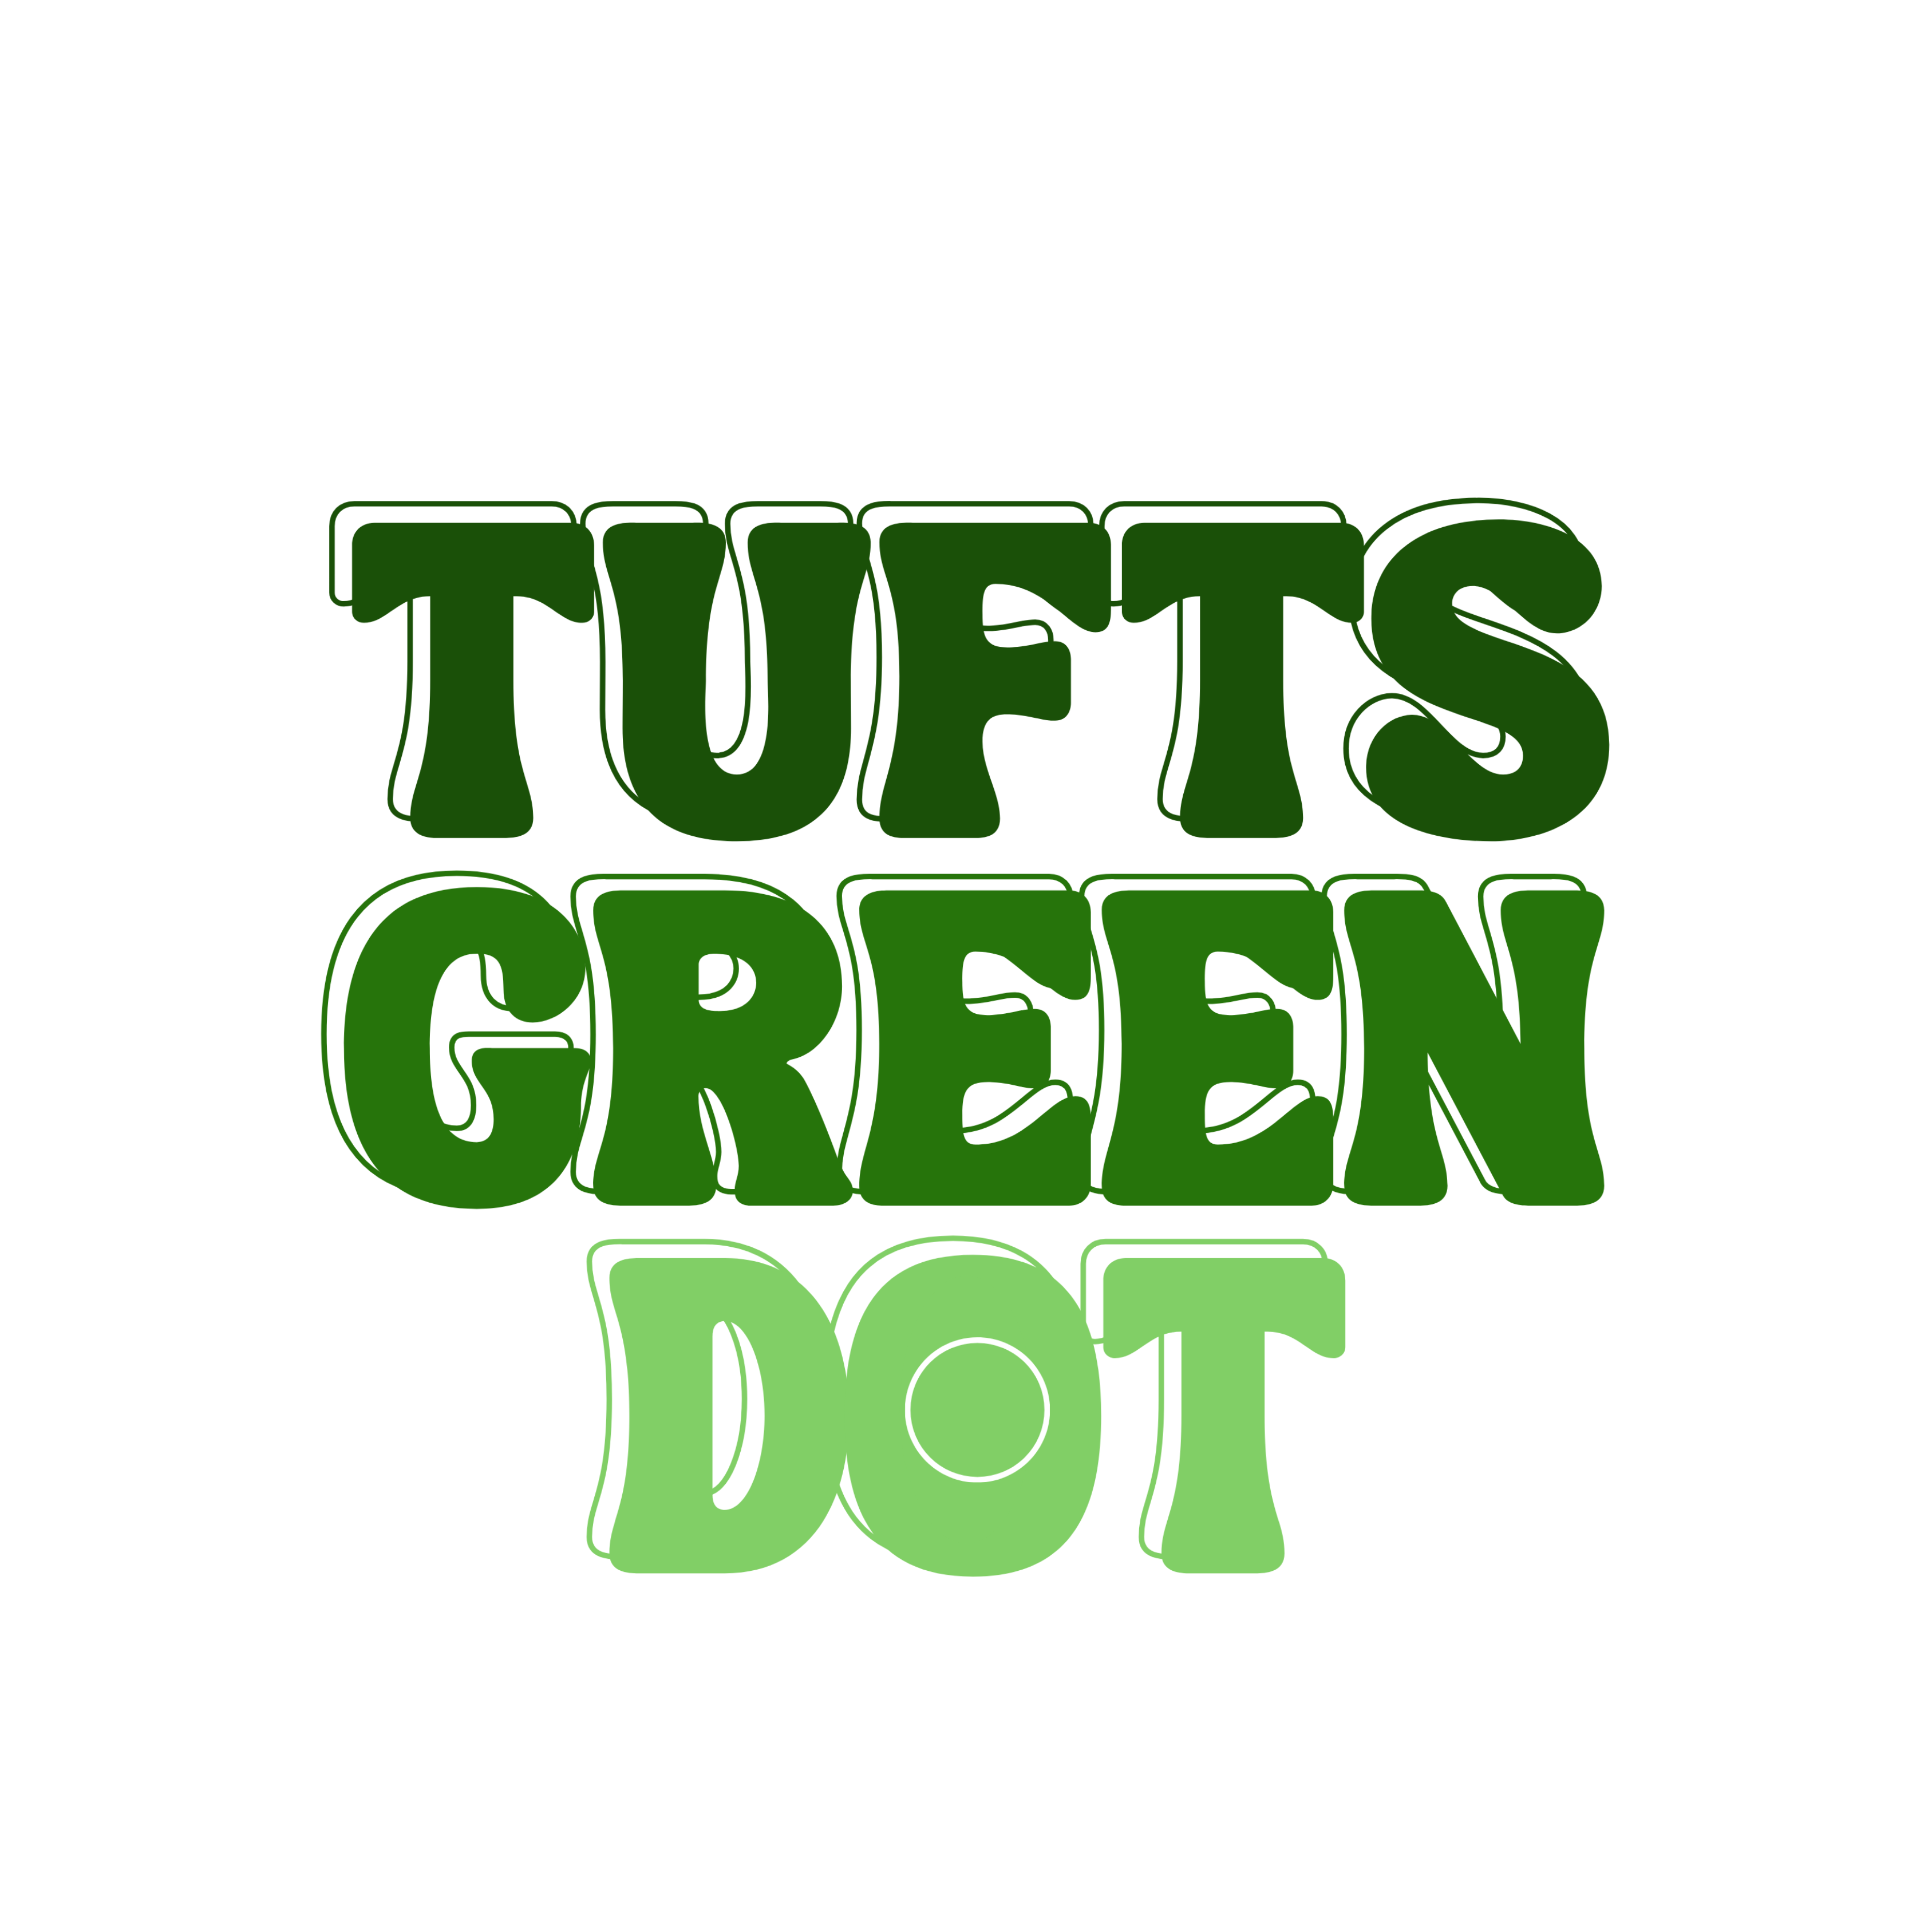 Tufts Green Dot sticker